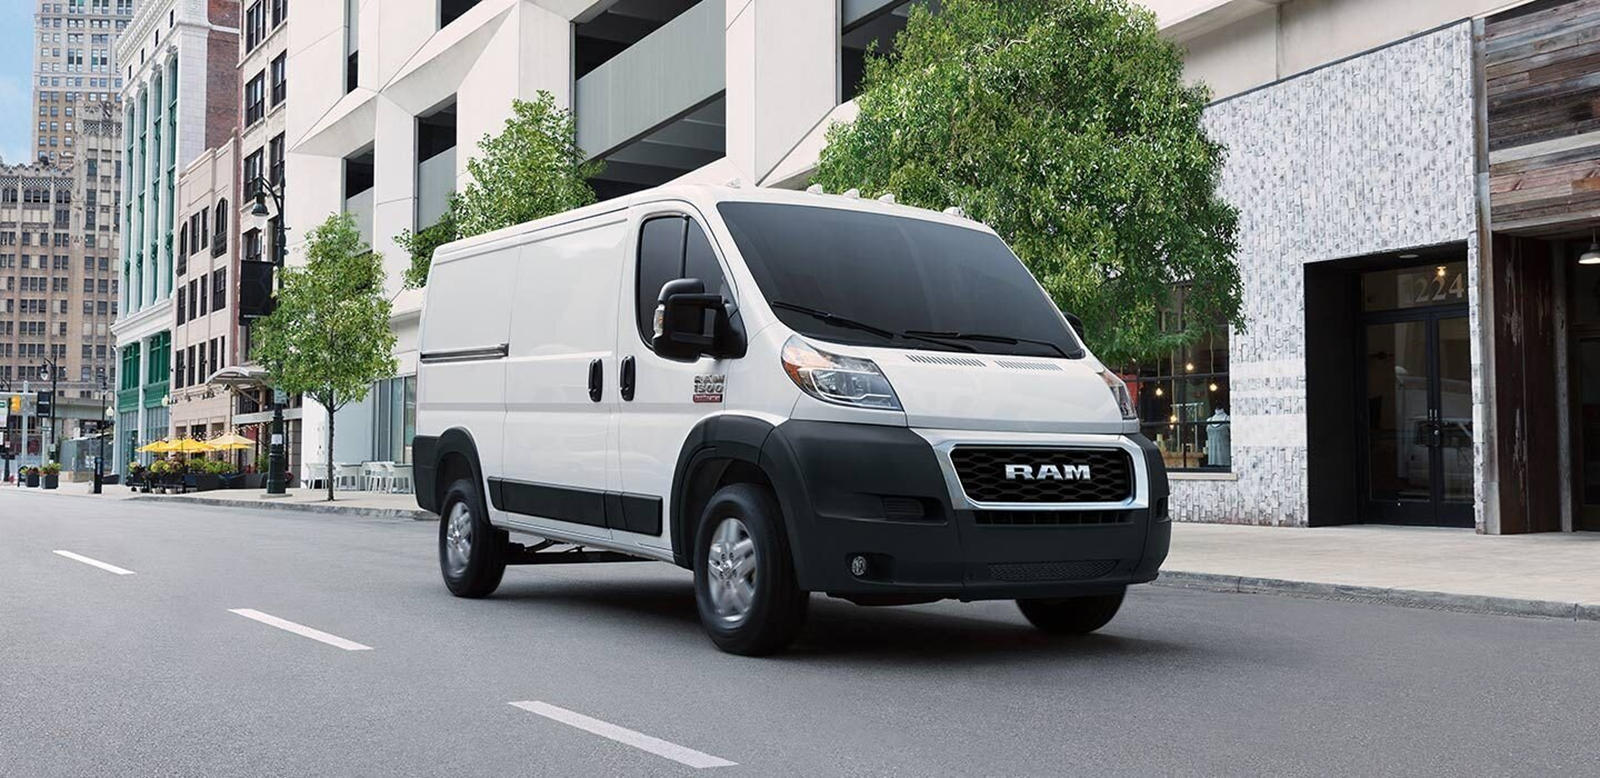 2021 Ram ProMaster Cargo Van: Review, Trims, Specs, Price, New Interior